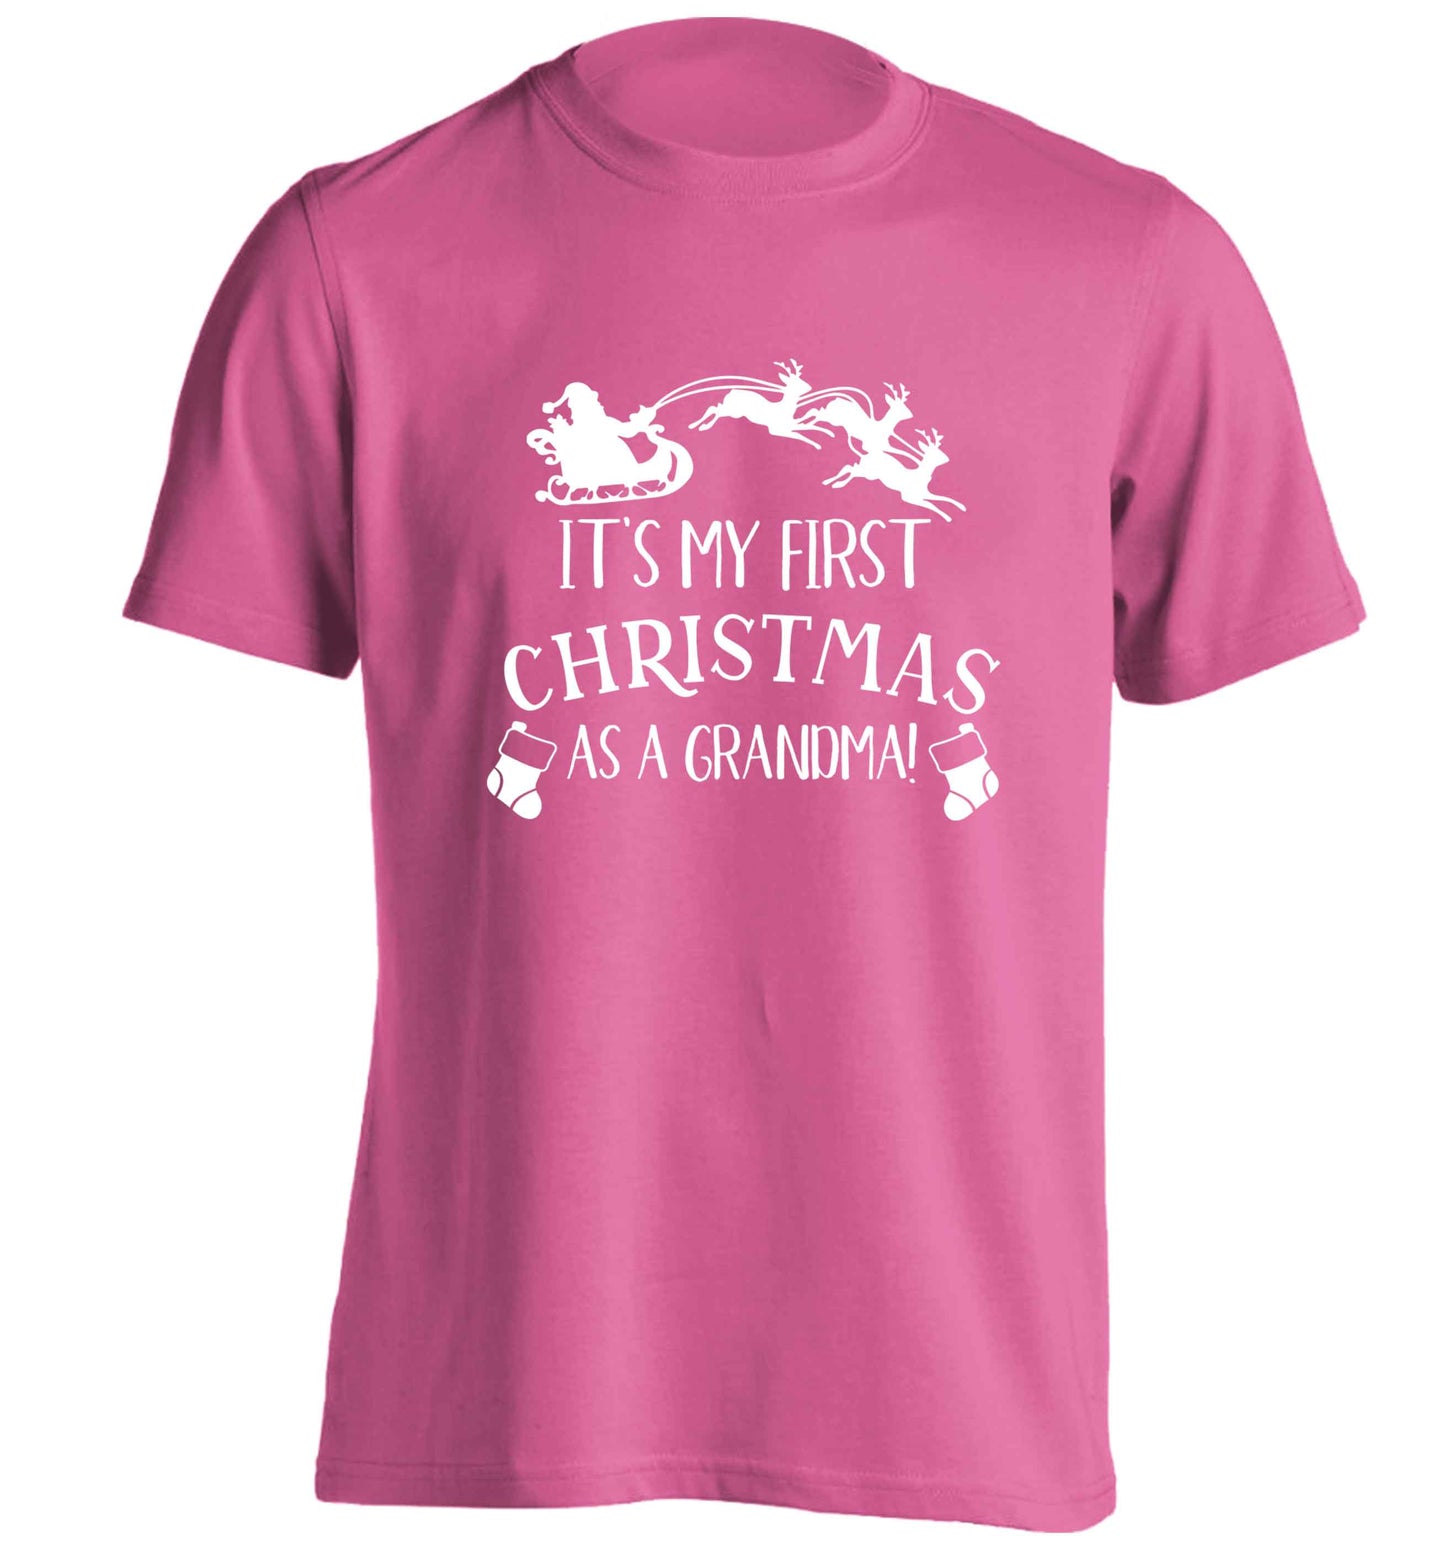 It's my first Christmas as a grandma! adults unisex pink Tshirt 2XL